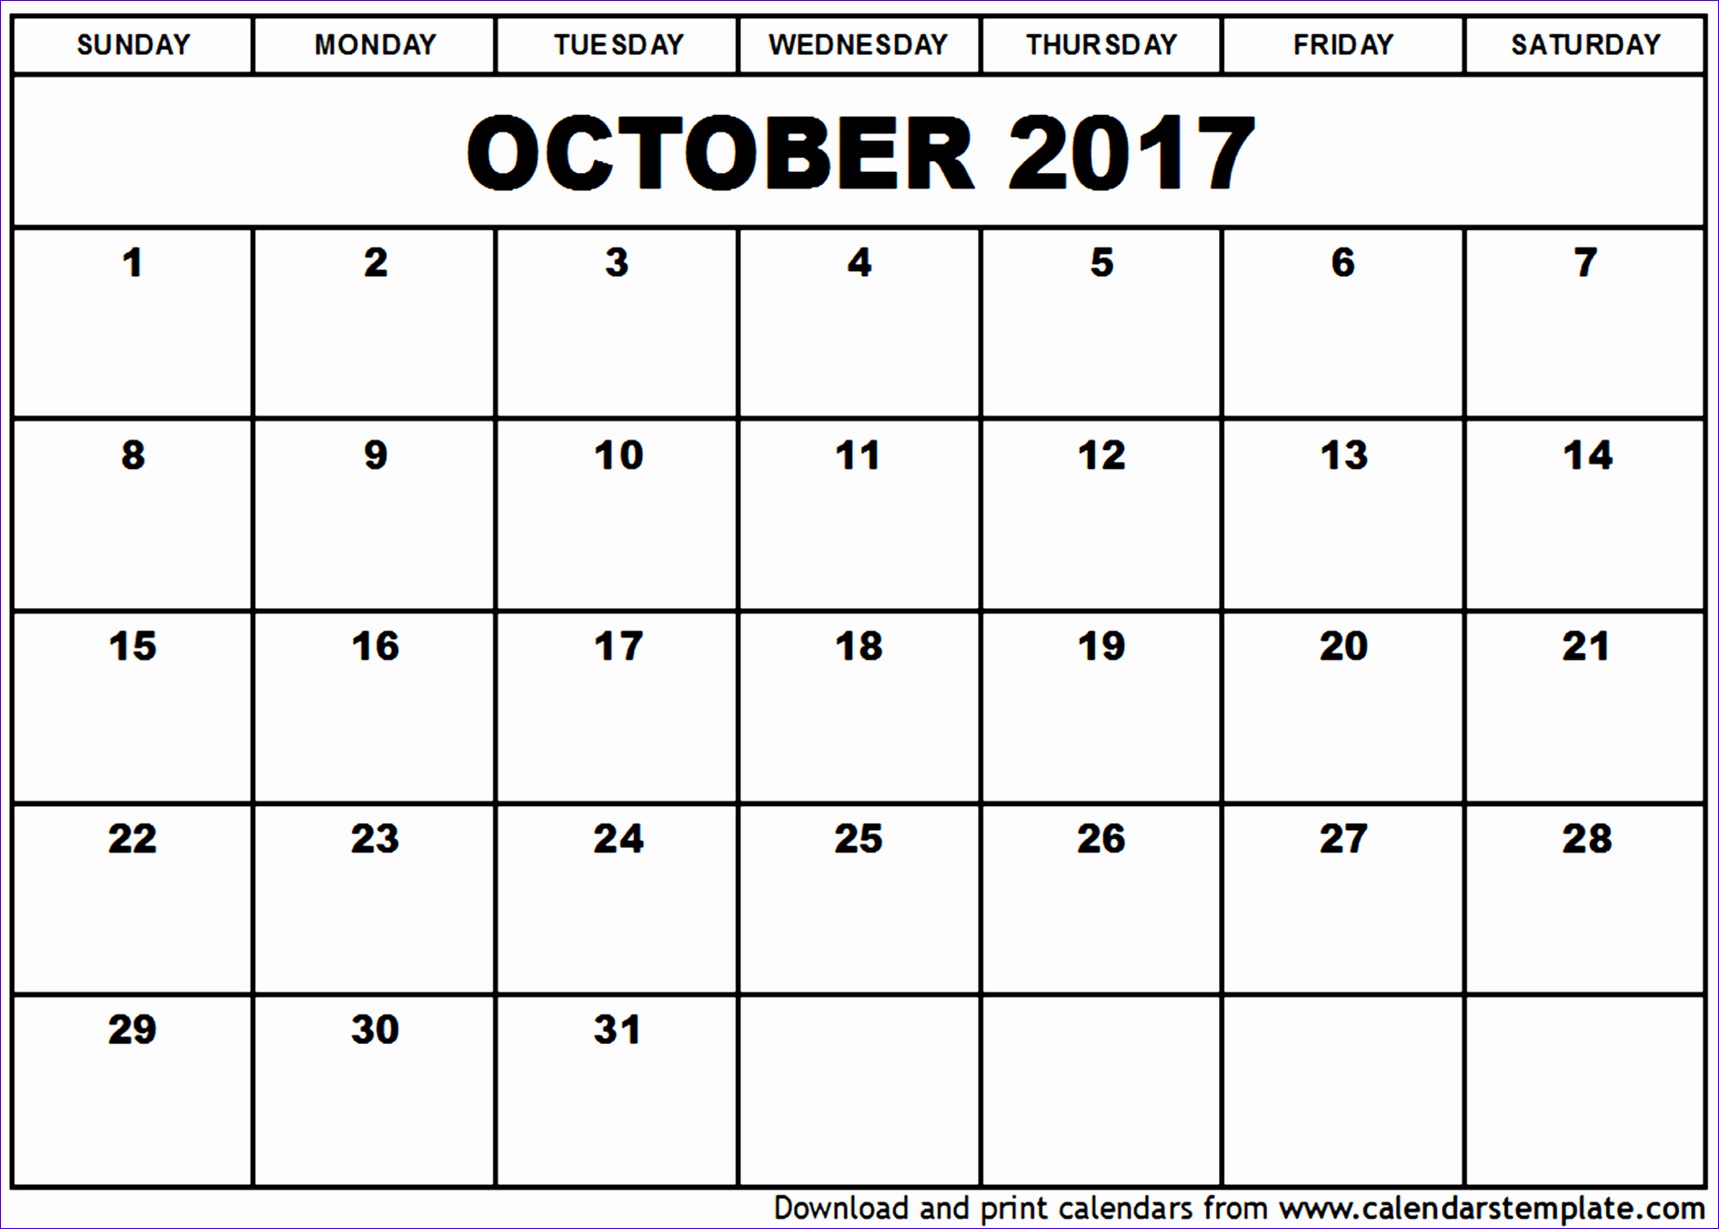 october 2017 calendar excel 2243 17191229